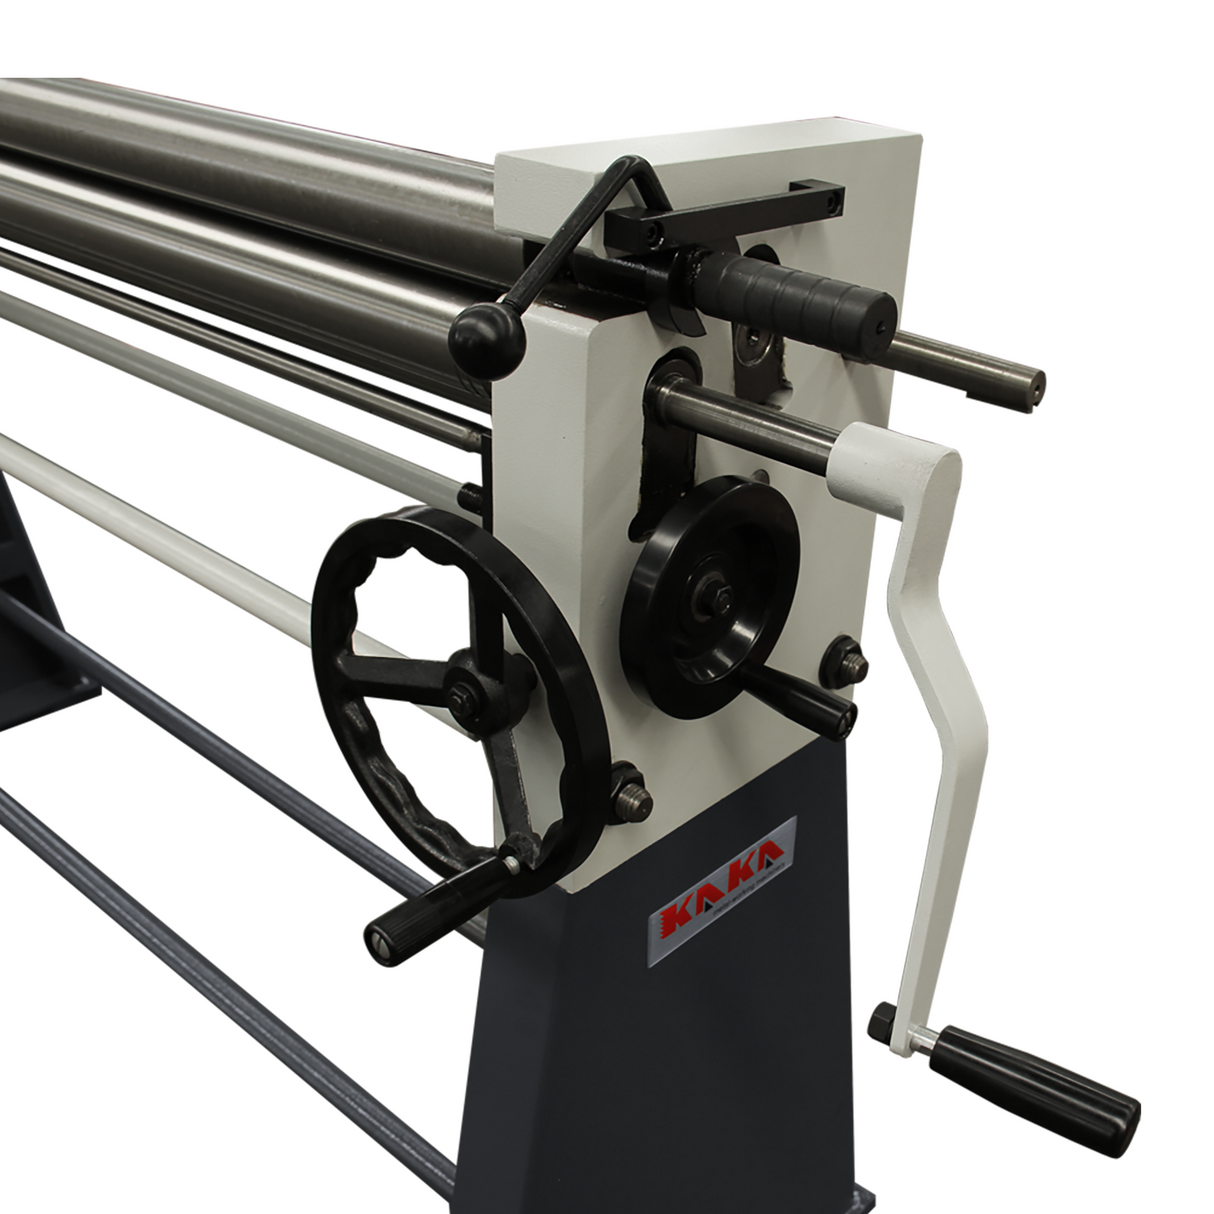 KANG Industrial W01-4914 Slip Roll Machine, Sheet Metal Roller Machine, 1250mm Slip Roll Roller Bending Round Machine